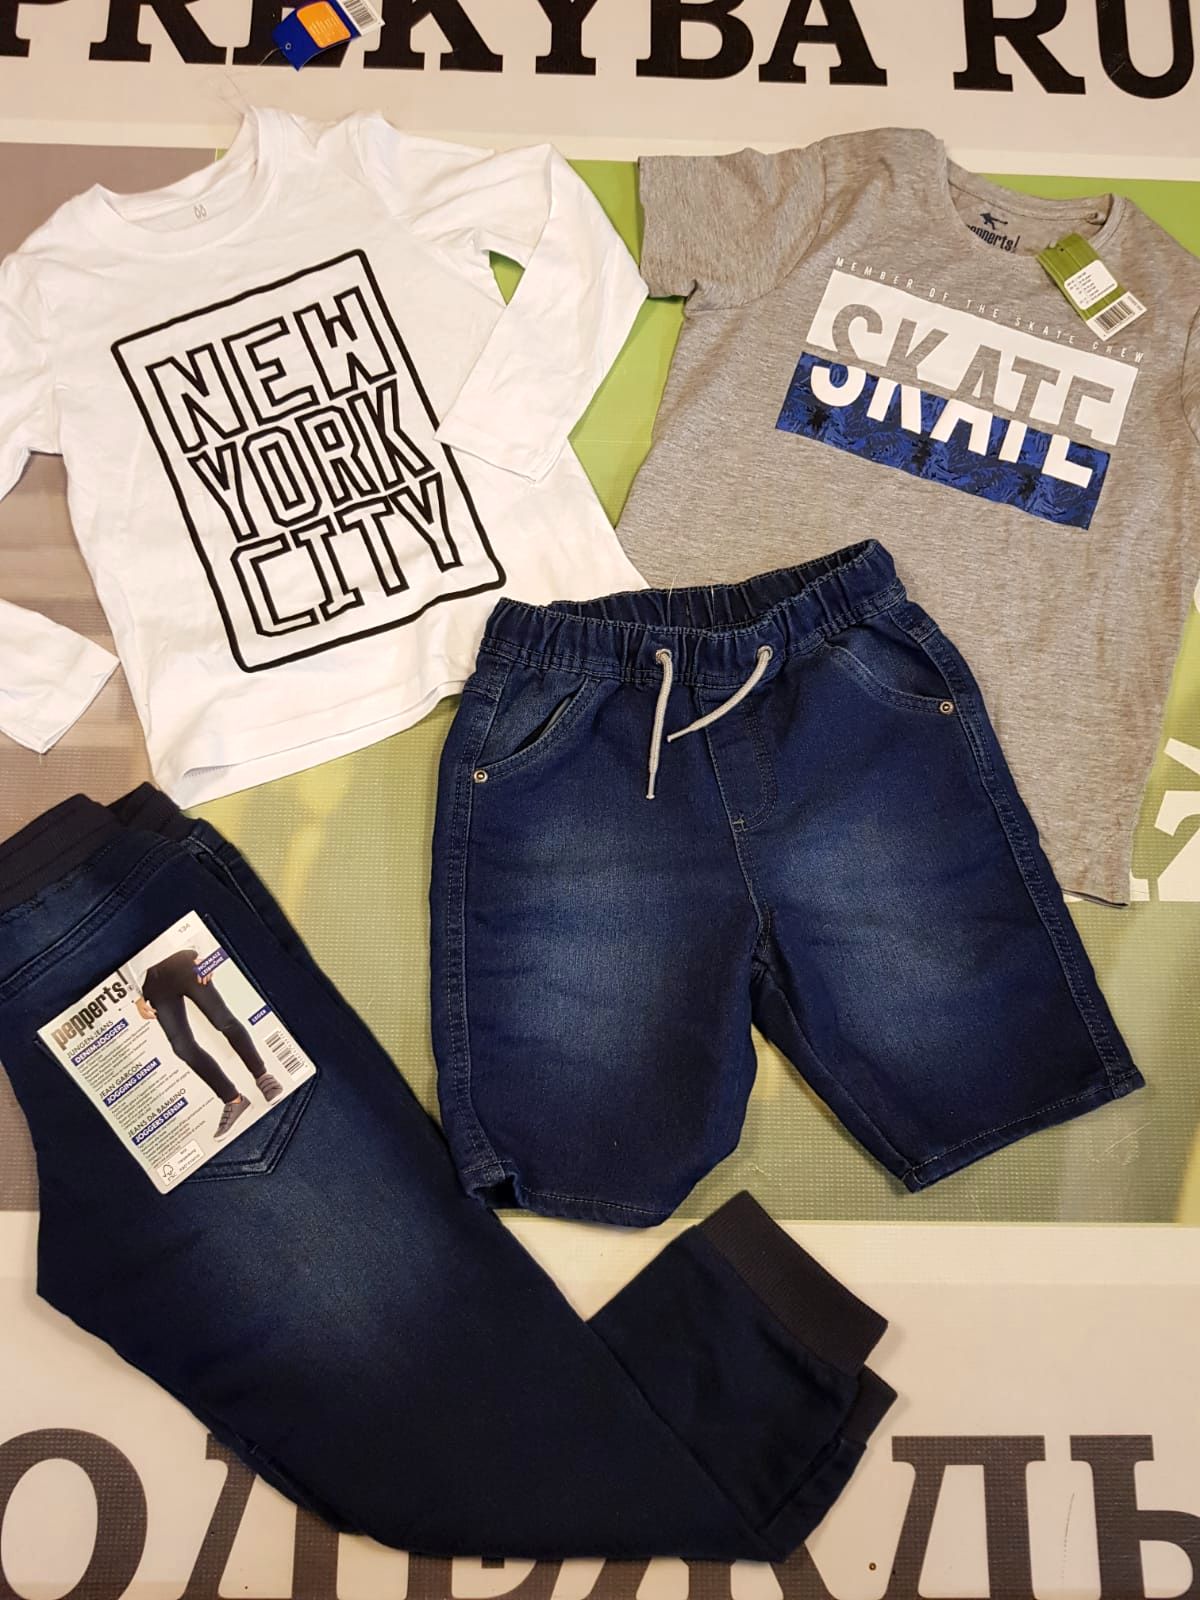 Kids clothes “supermarket”